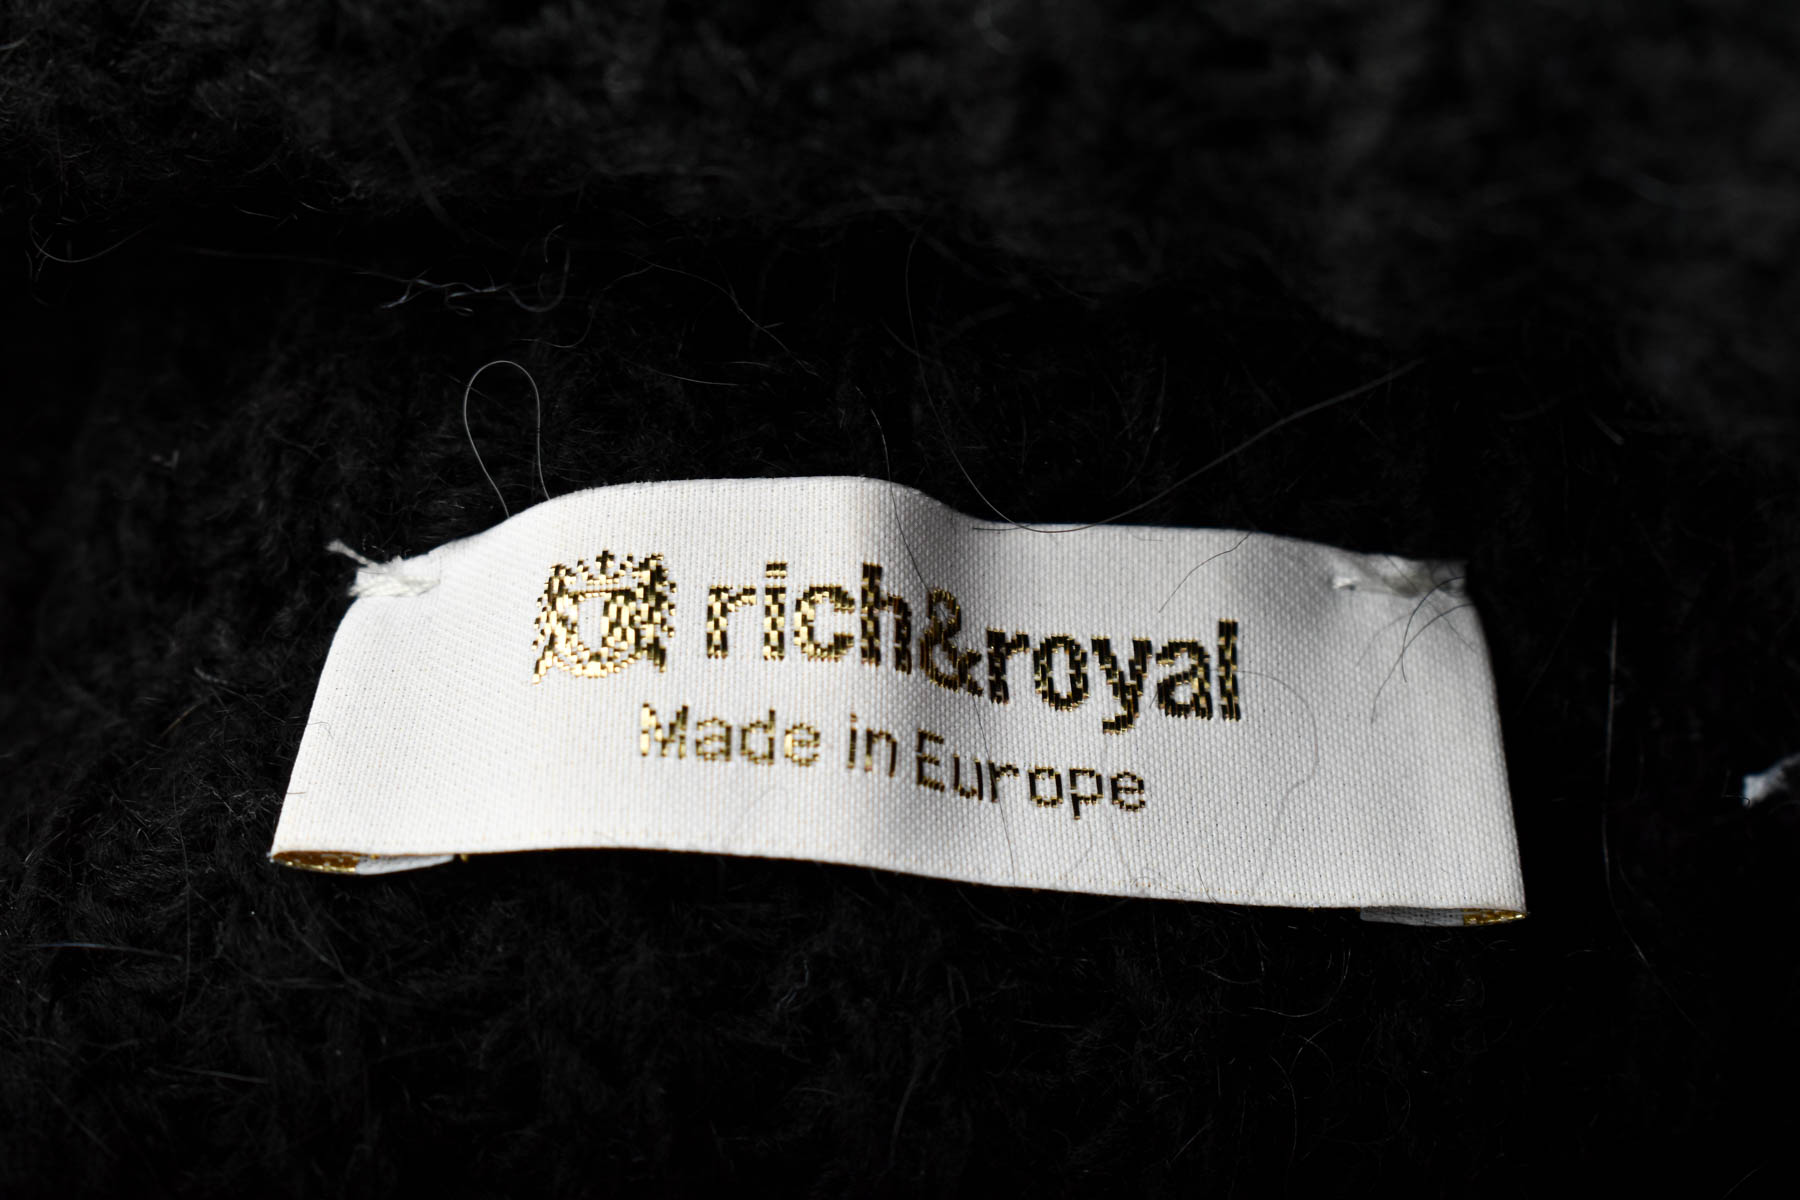 Women's sweater - Rich & Royal - 2